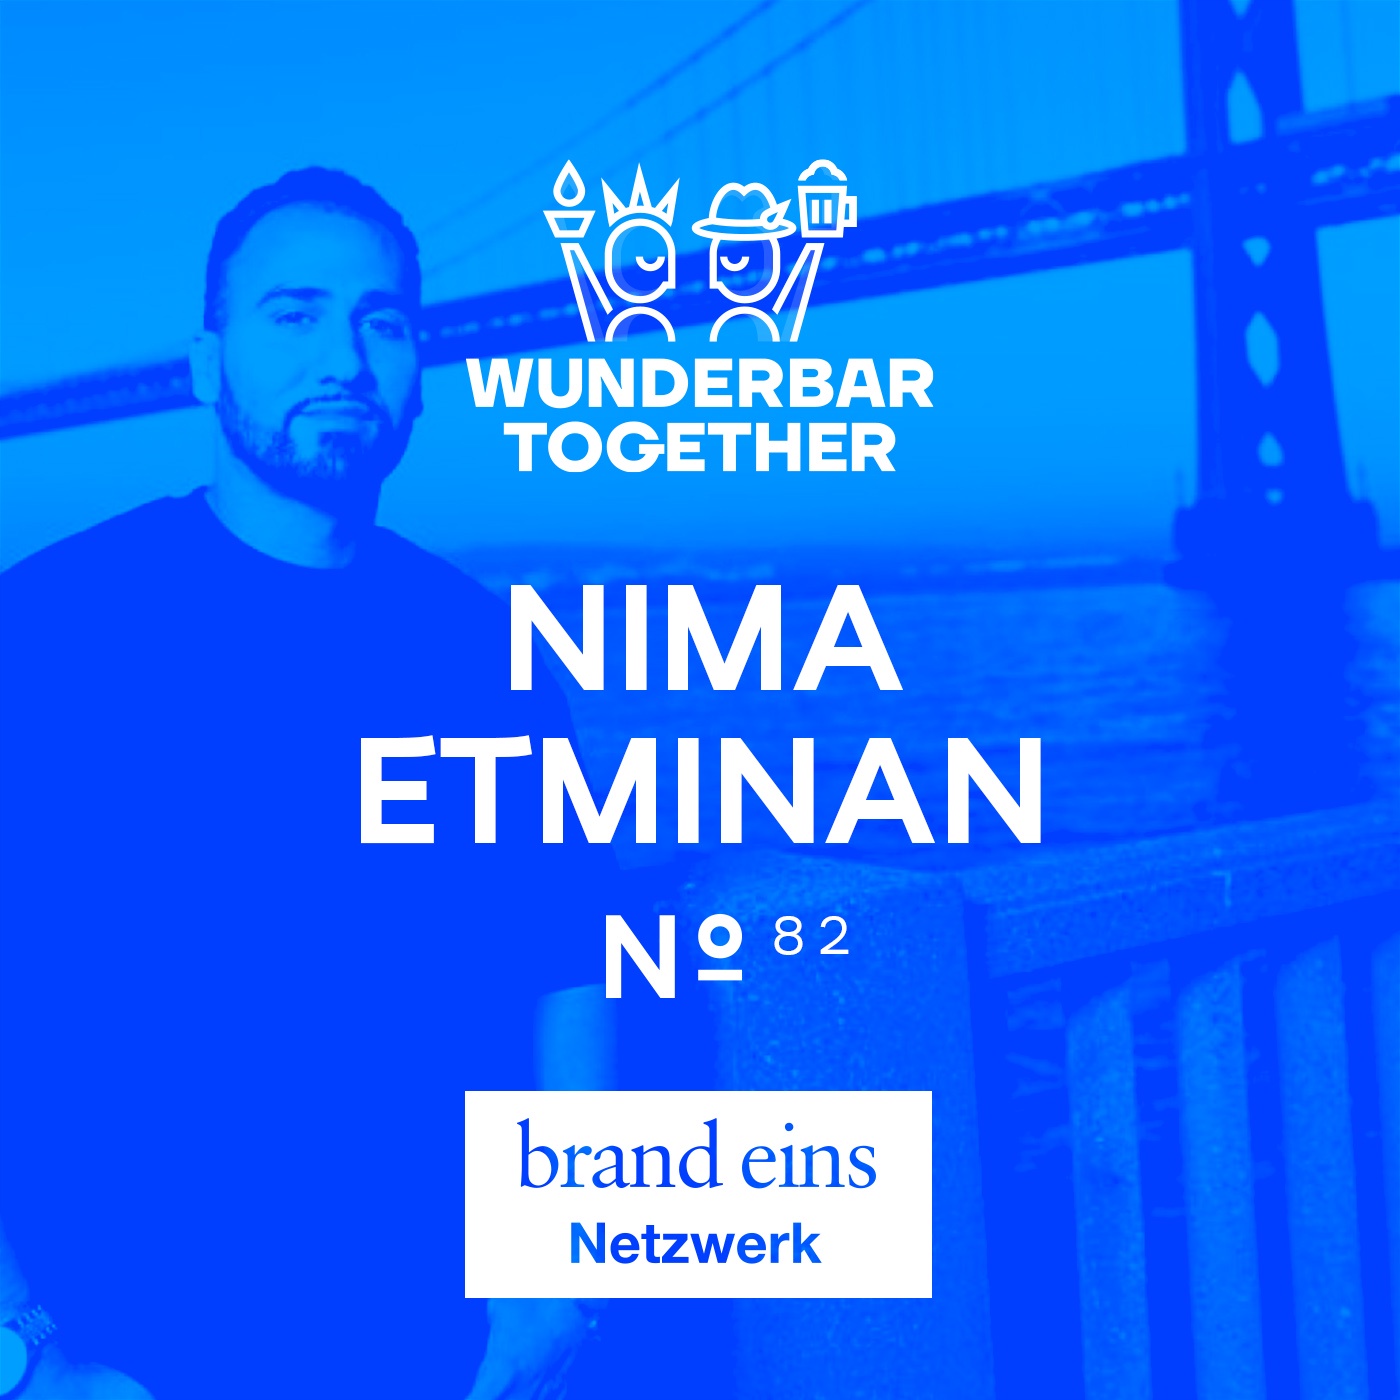 Wie kreiert man einen HipHop-Star, Nima Etminan?